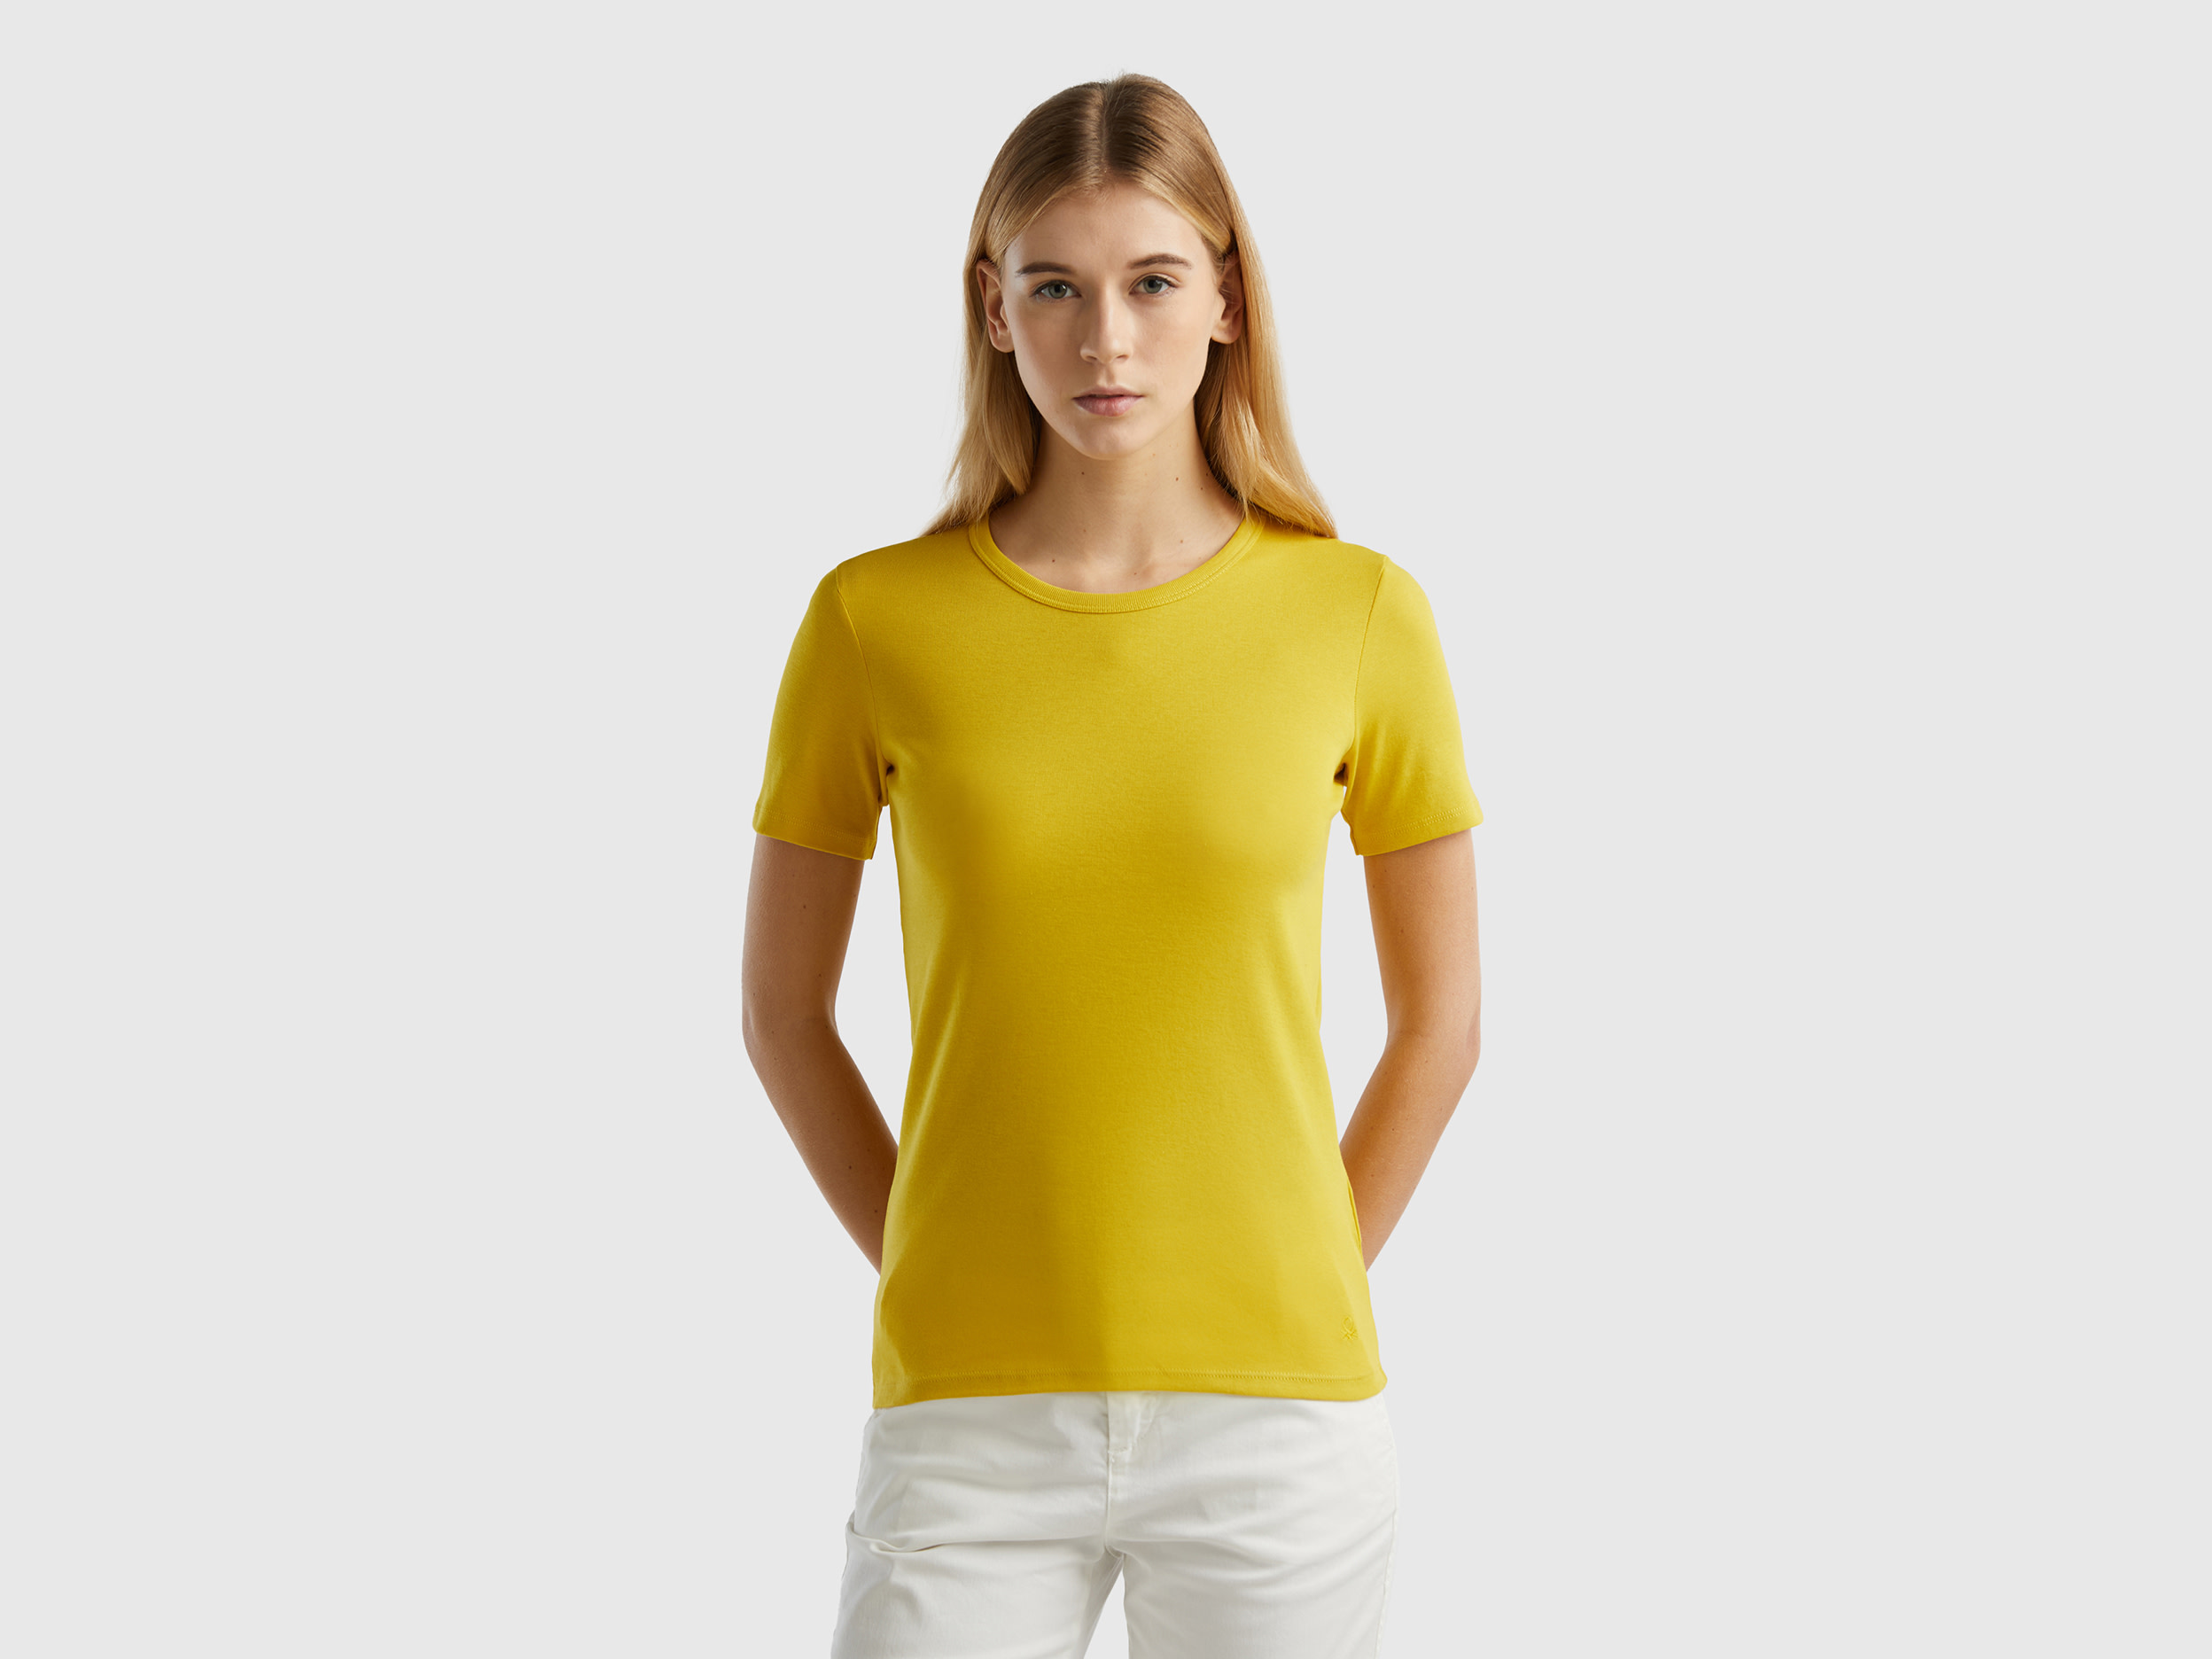 Benetton, Long Fiber Cotton T-shirt, size M, Yellow, Women